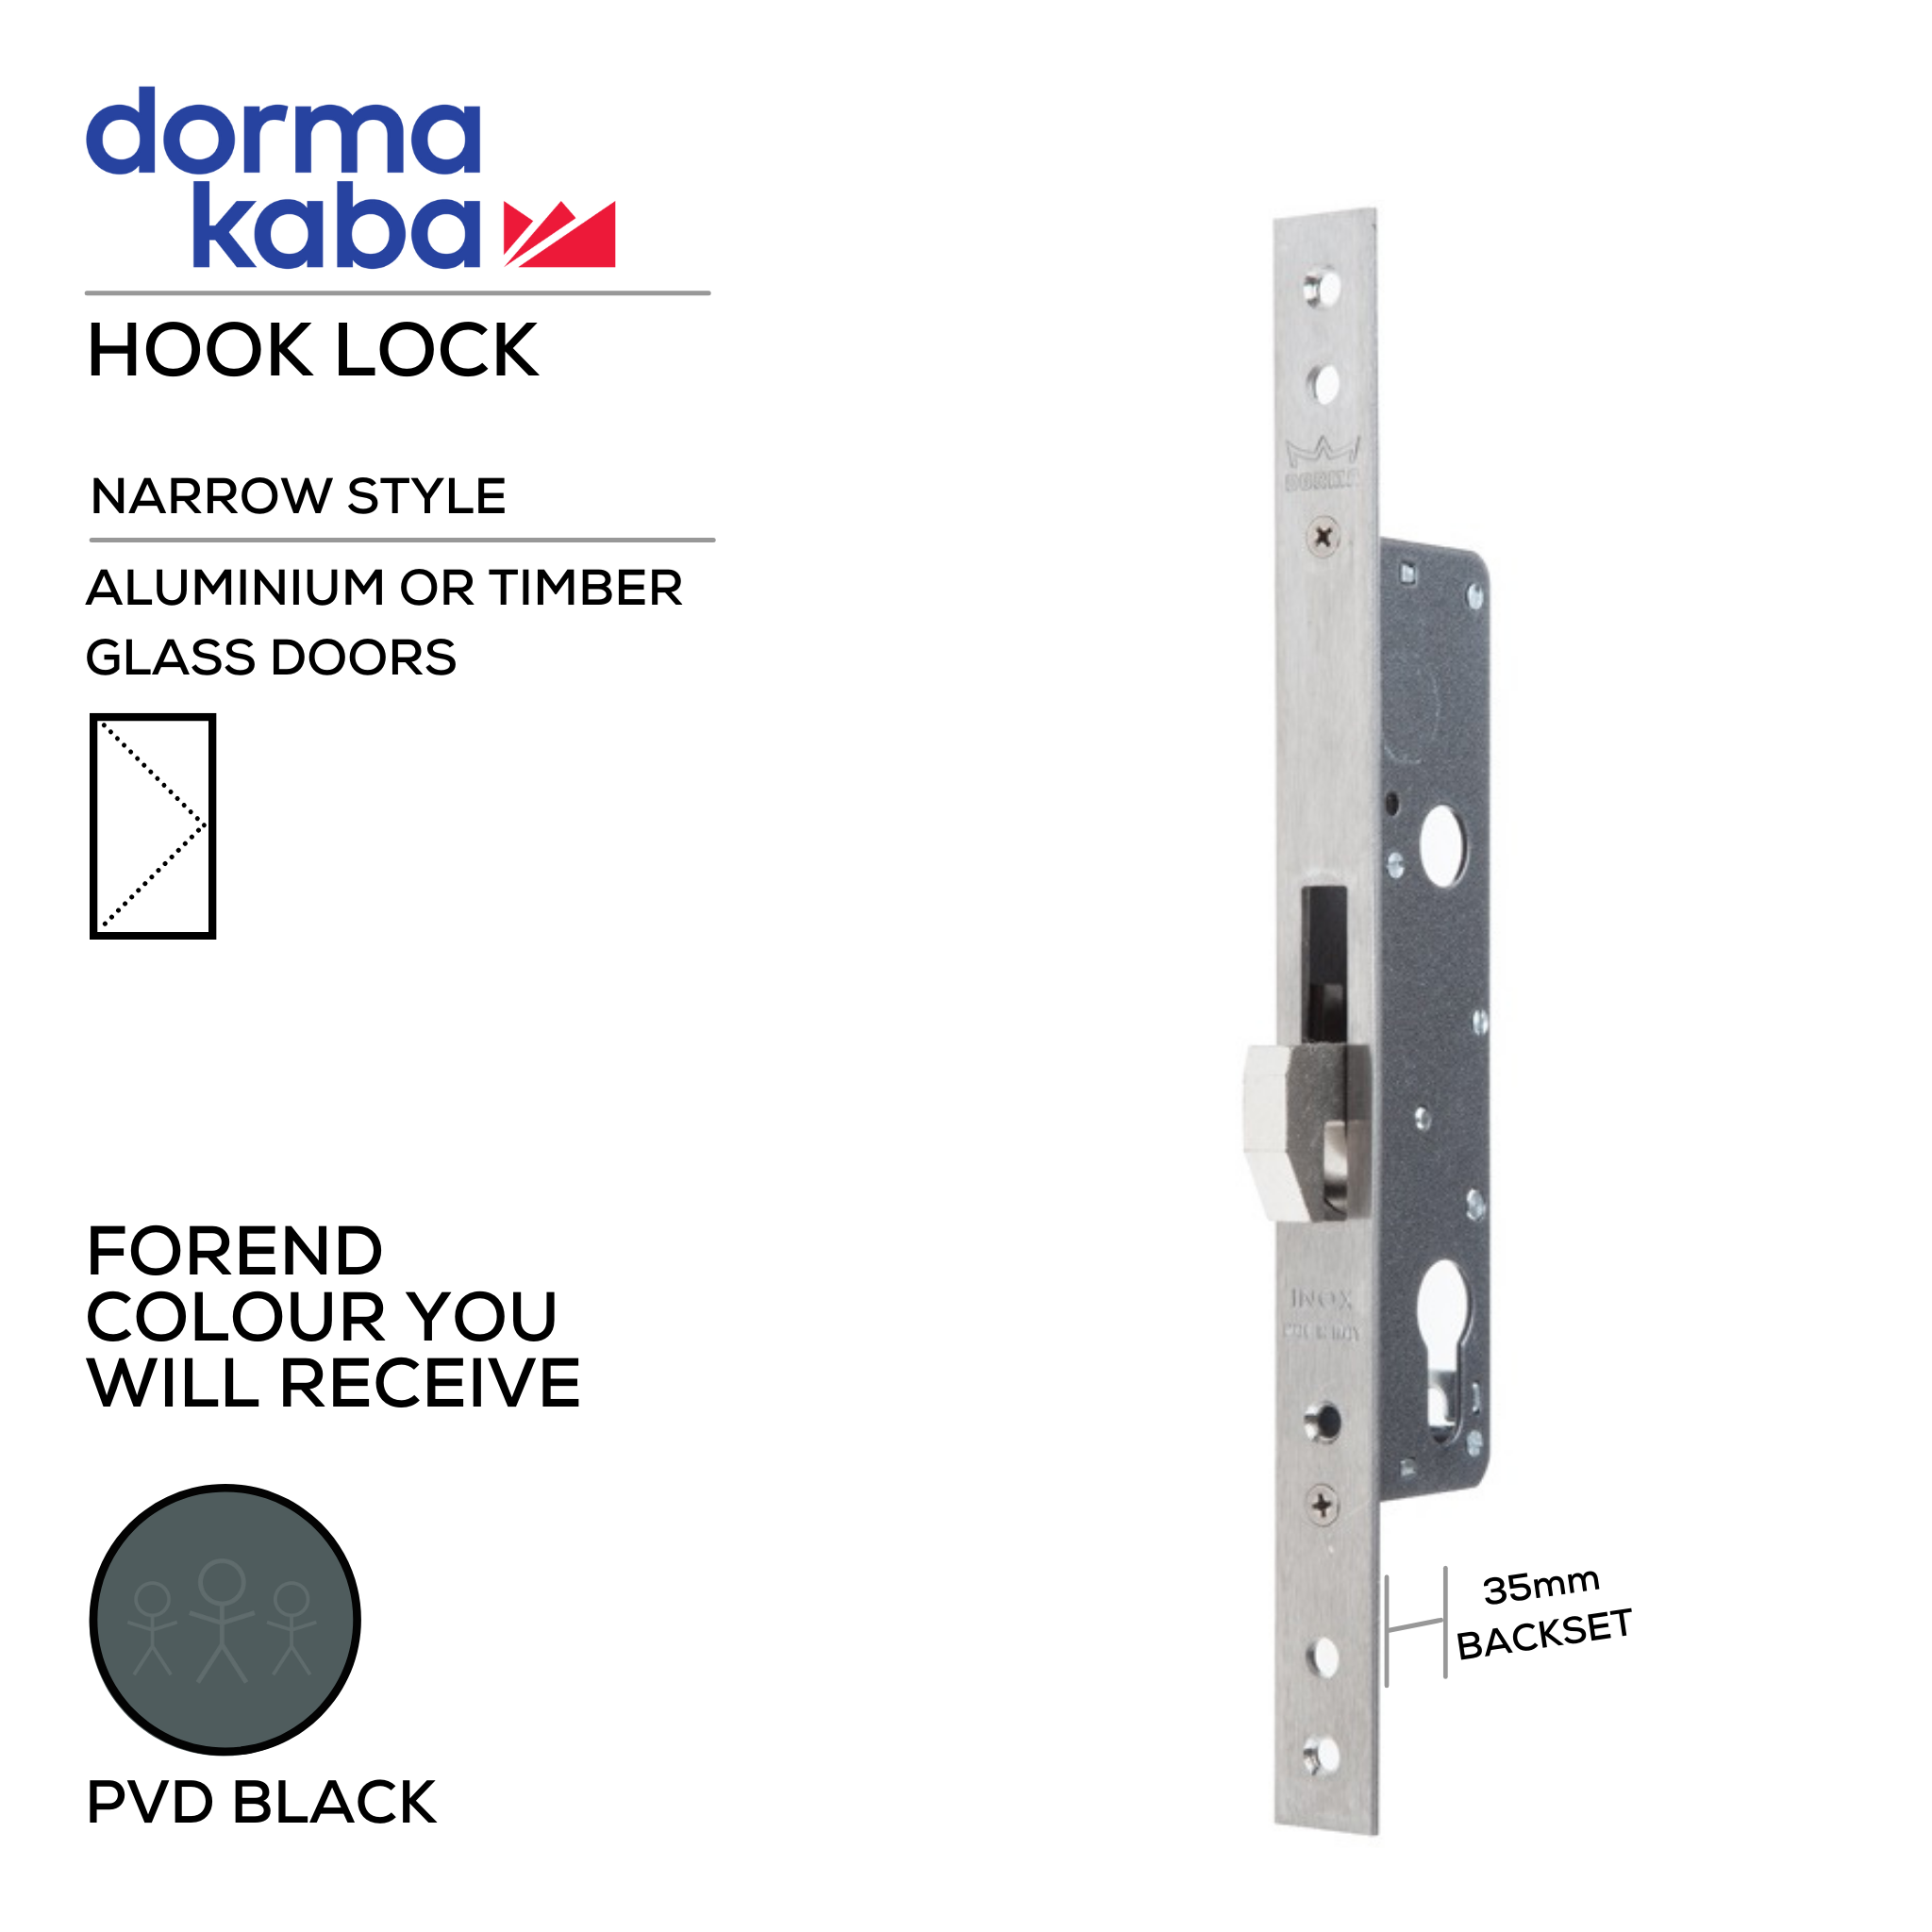 D02935 35mm - BLK, Narrow Style, Hook Lock, Heavy Duty, Euro Cylinder, Excluding Cylinder, 35mm (Backset), PVD Black, DORMAKABA